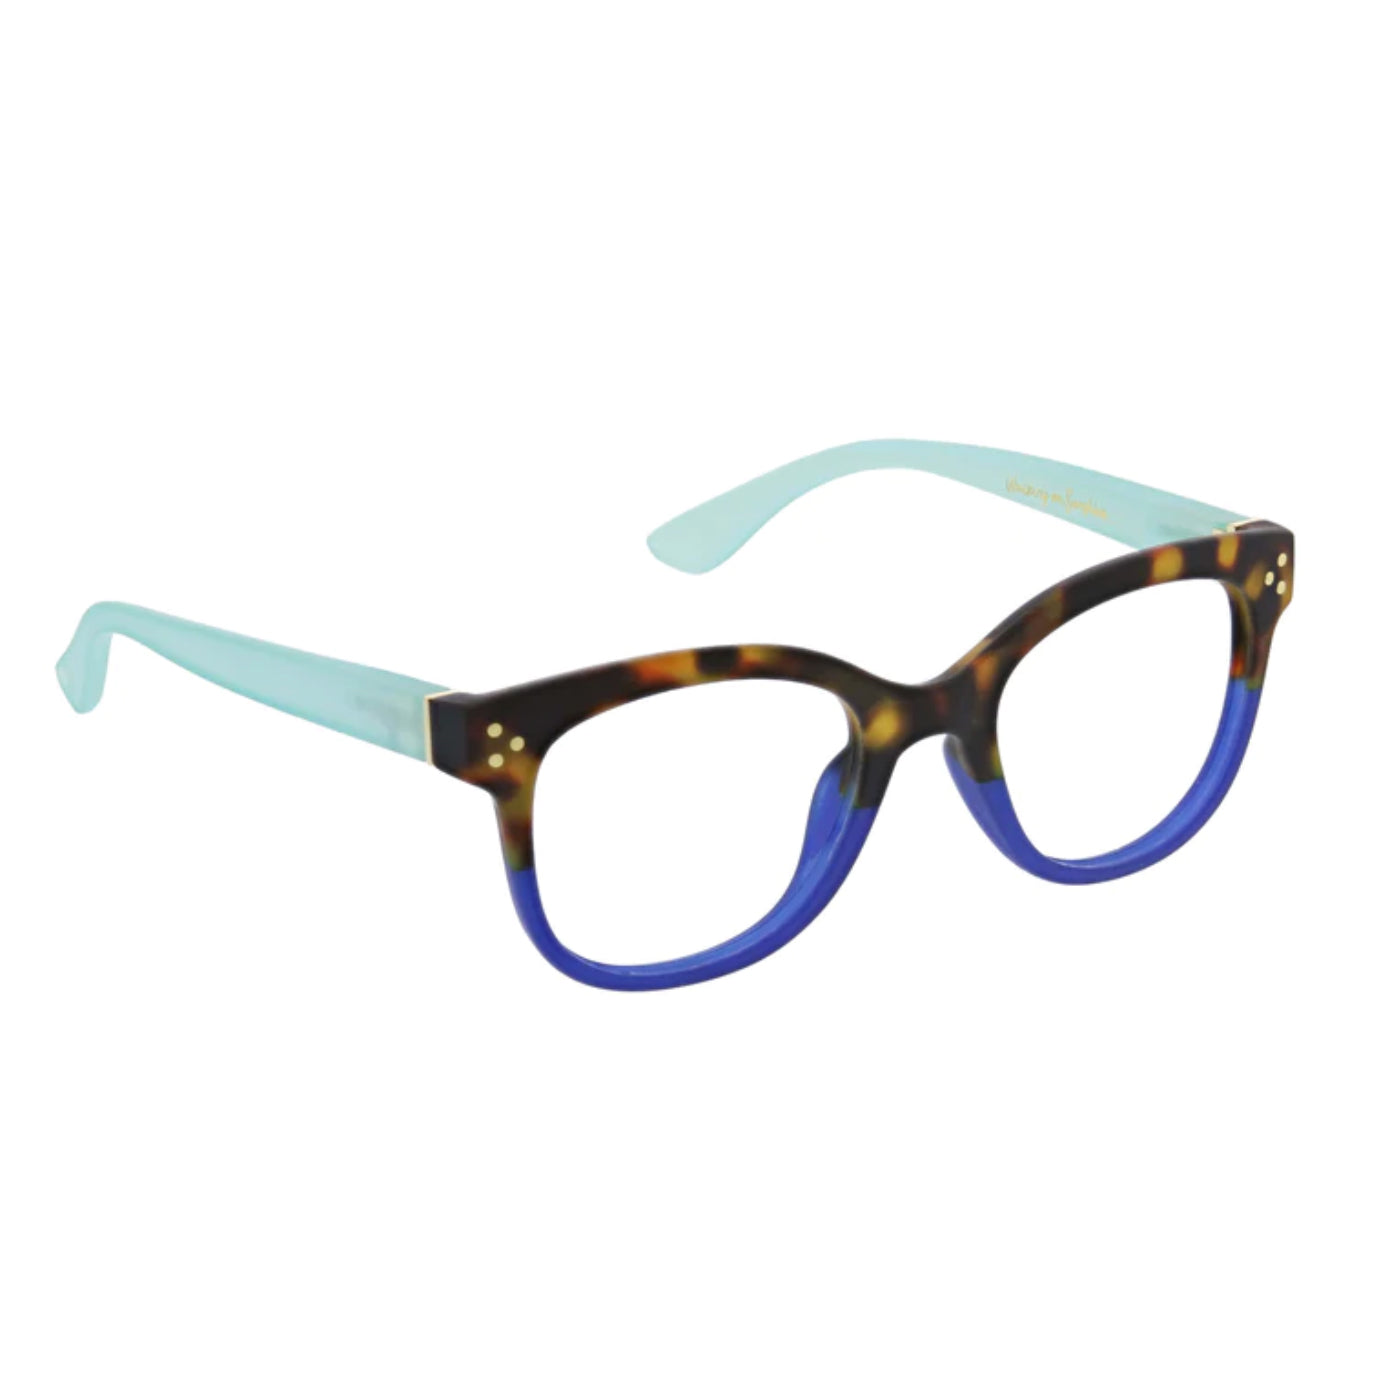 Walking on Sunshine Tortoise/Aqua Peepers Glasses